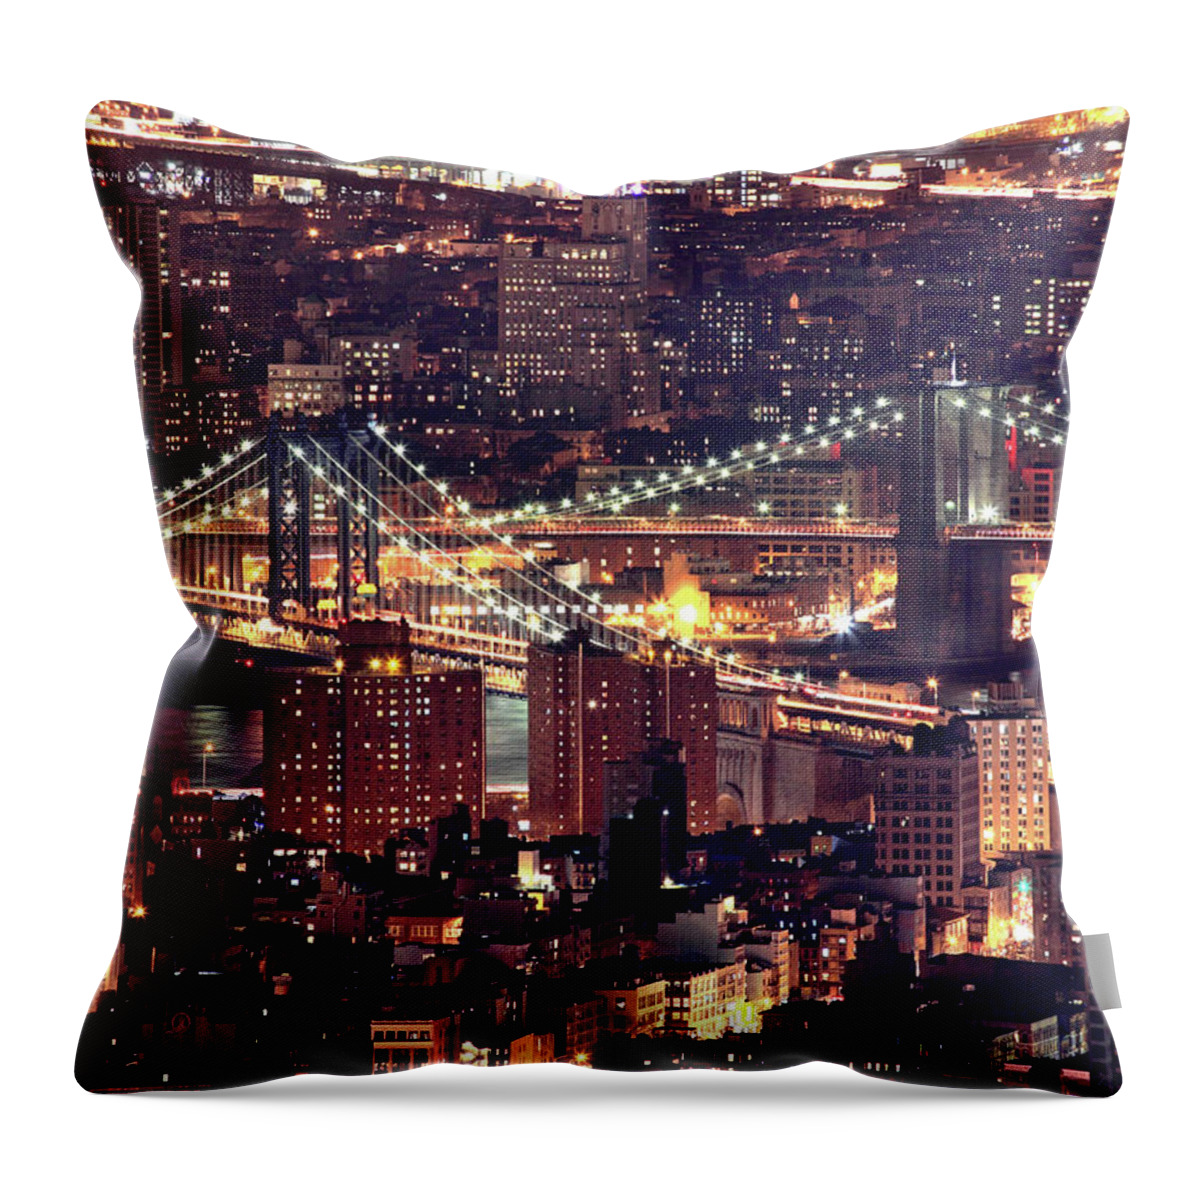 Suspension Bridge Throw Pillow featuring the photograph Manhattan And Brooklyn Bridges by Rob Kroenert